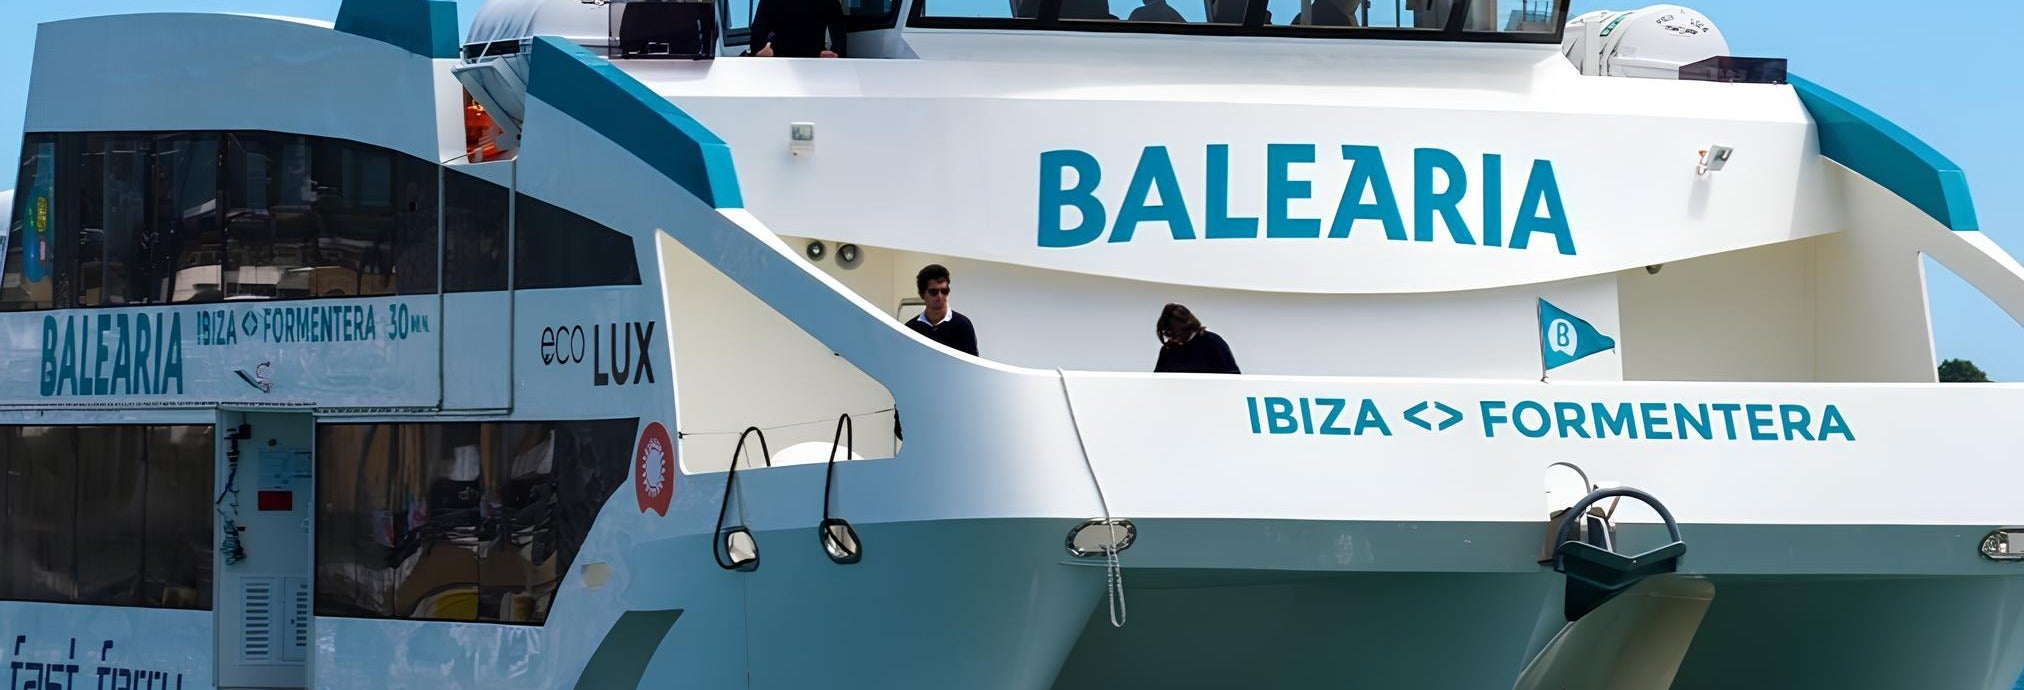 Bateau pour Formentera avec Baleària depuis Ibiza